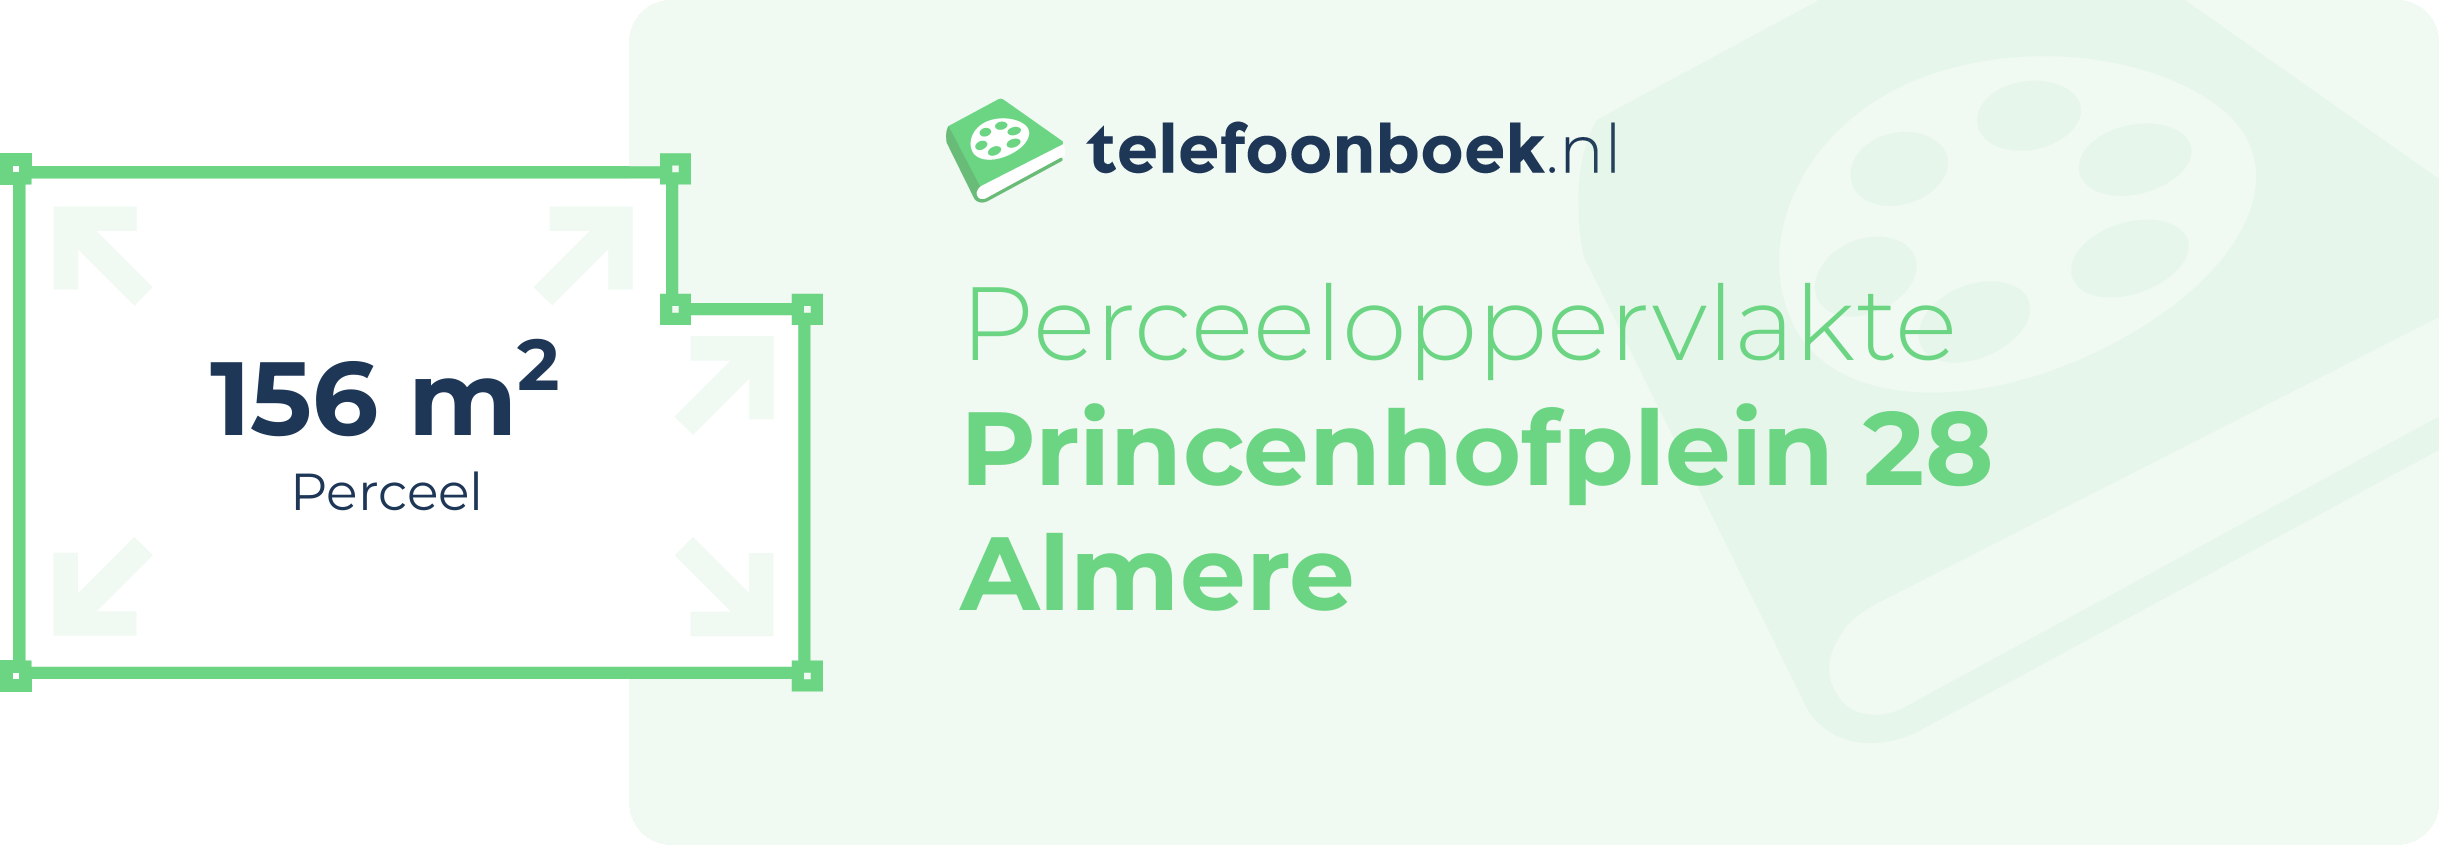 Perceeloppervlakte Princenhofplein 28 Almere